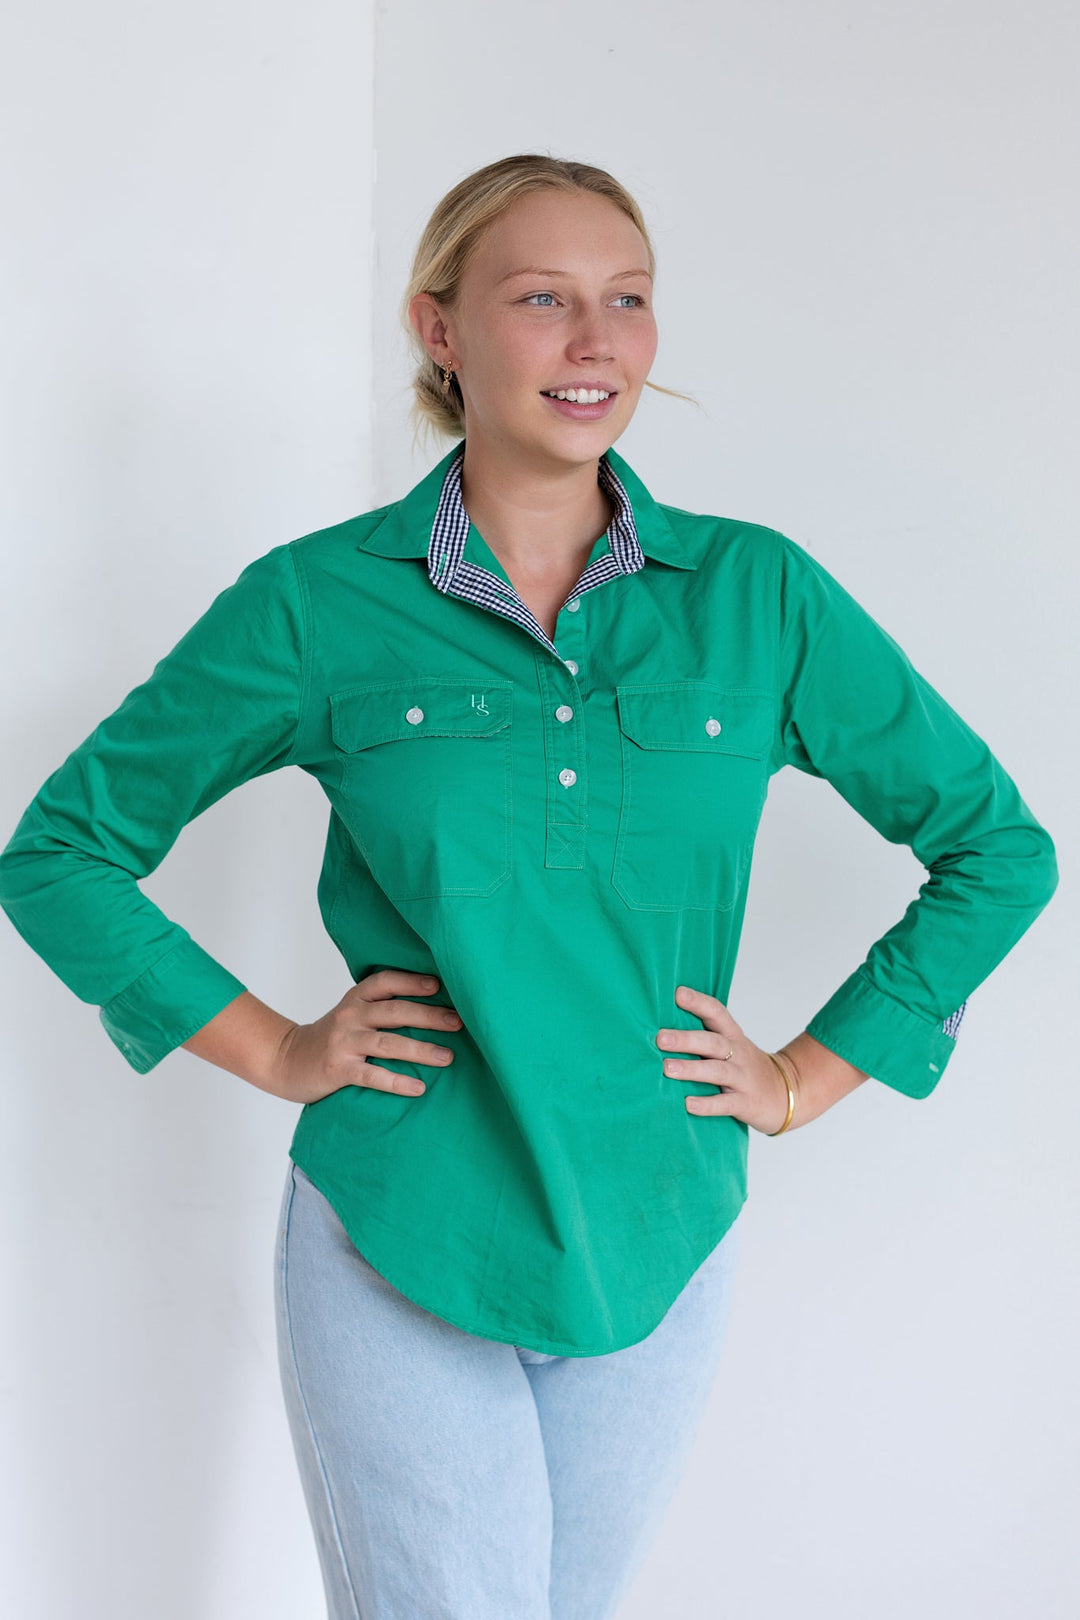 Heidi Workshirt in Emerald Green - Hide and Seek Clothing